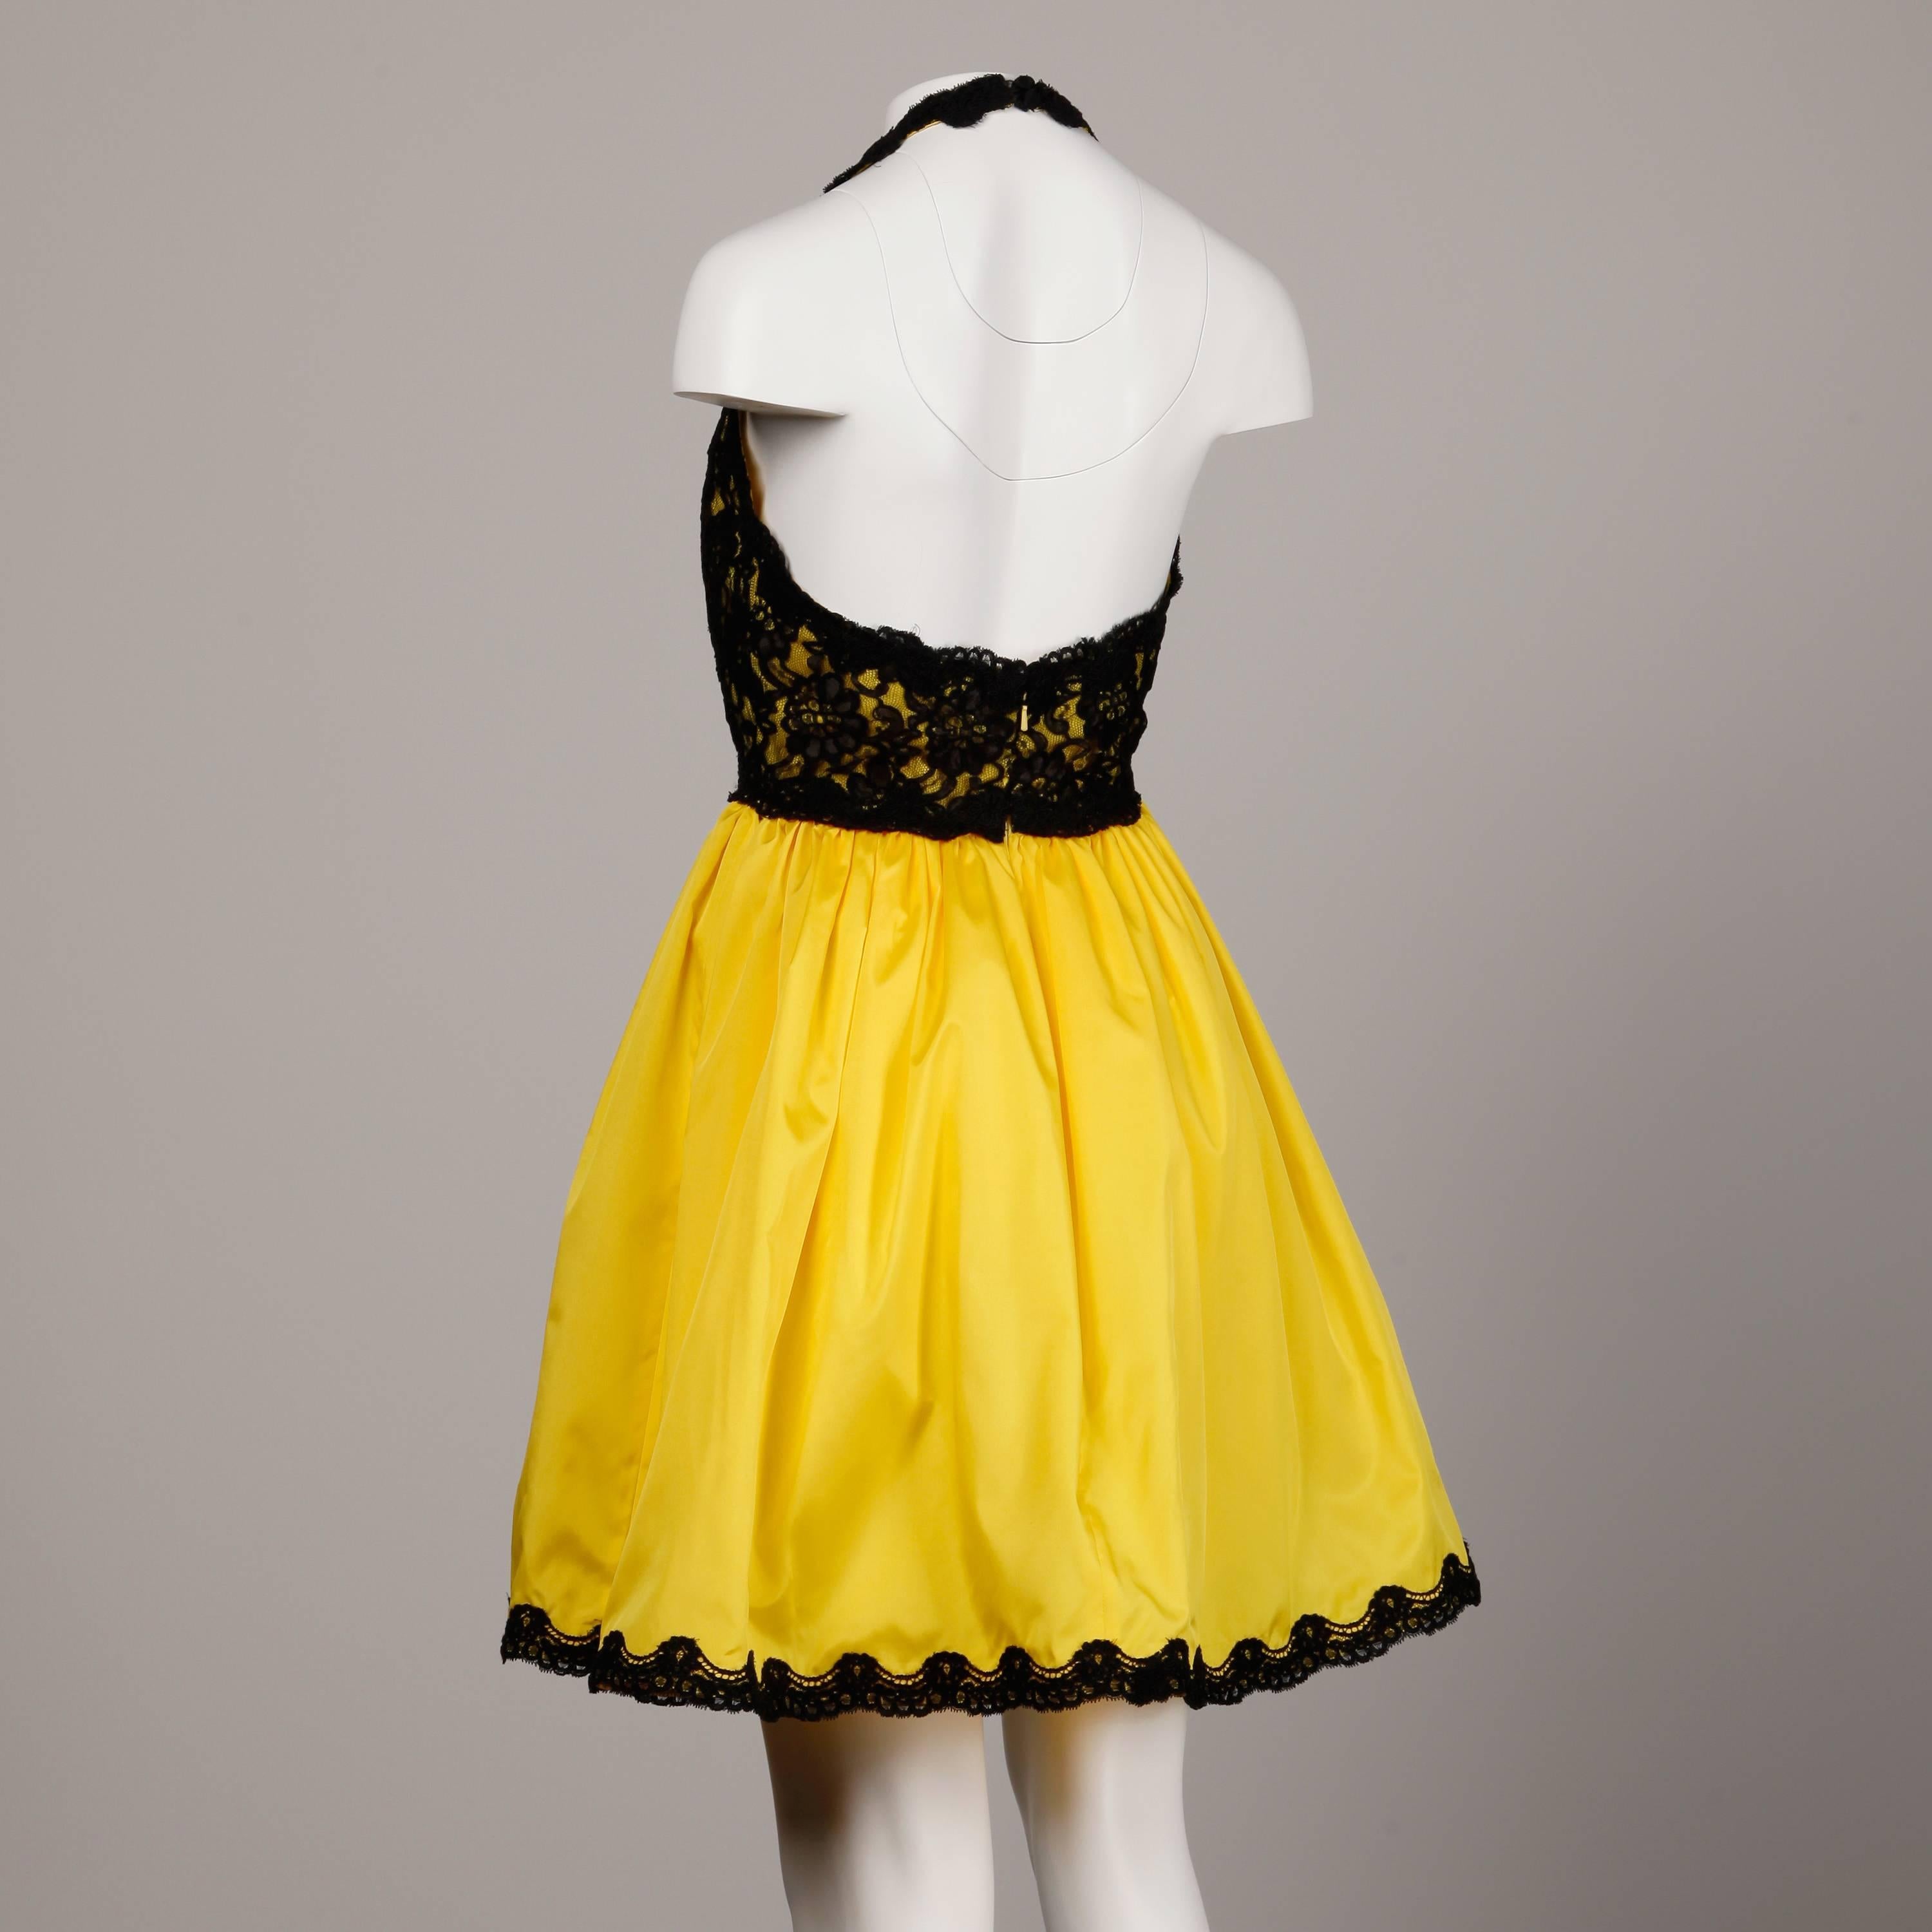 yellow and black dress